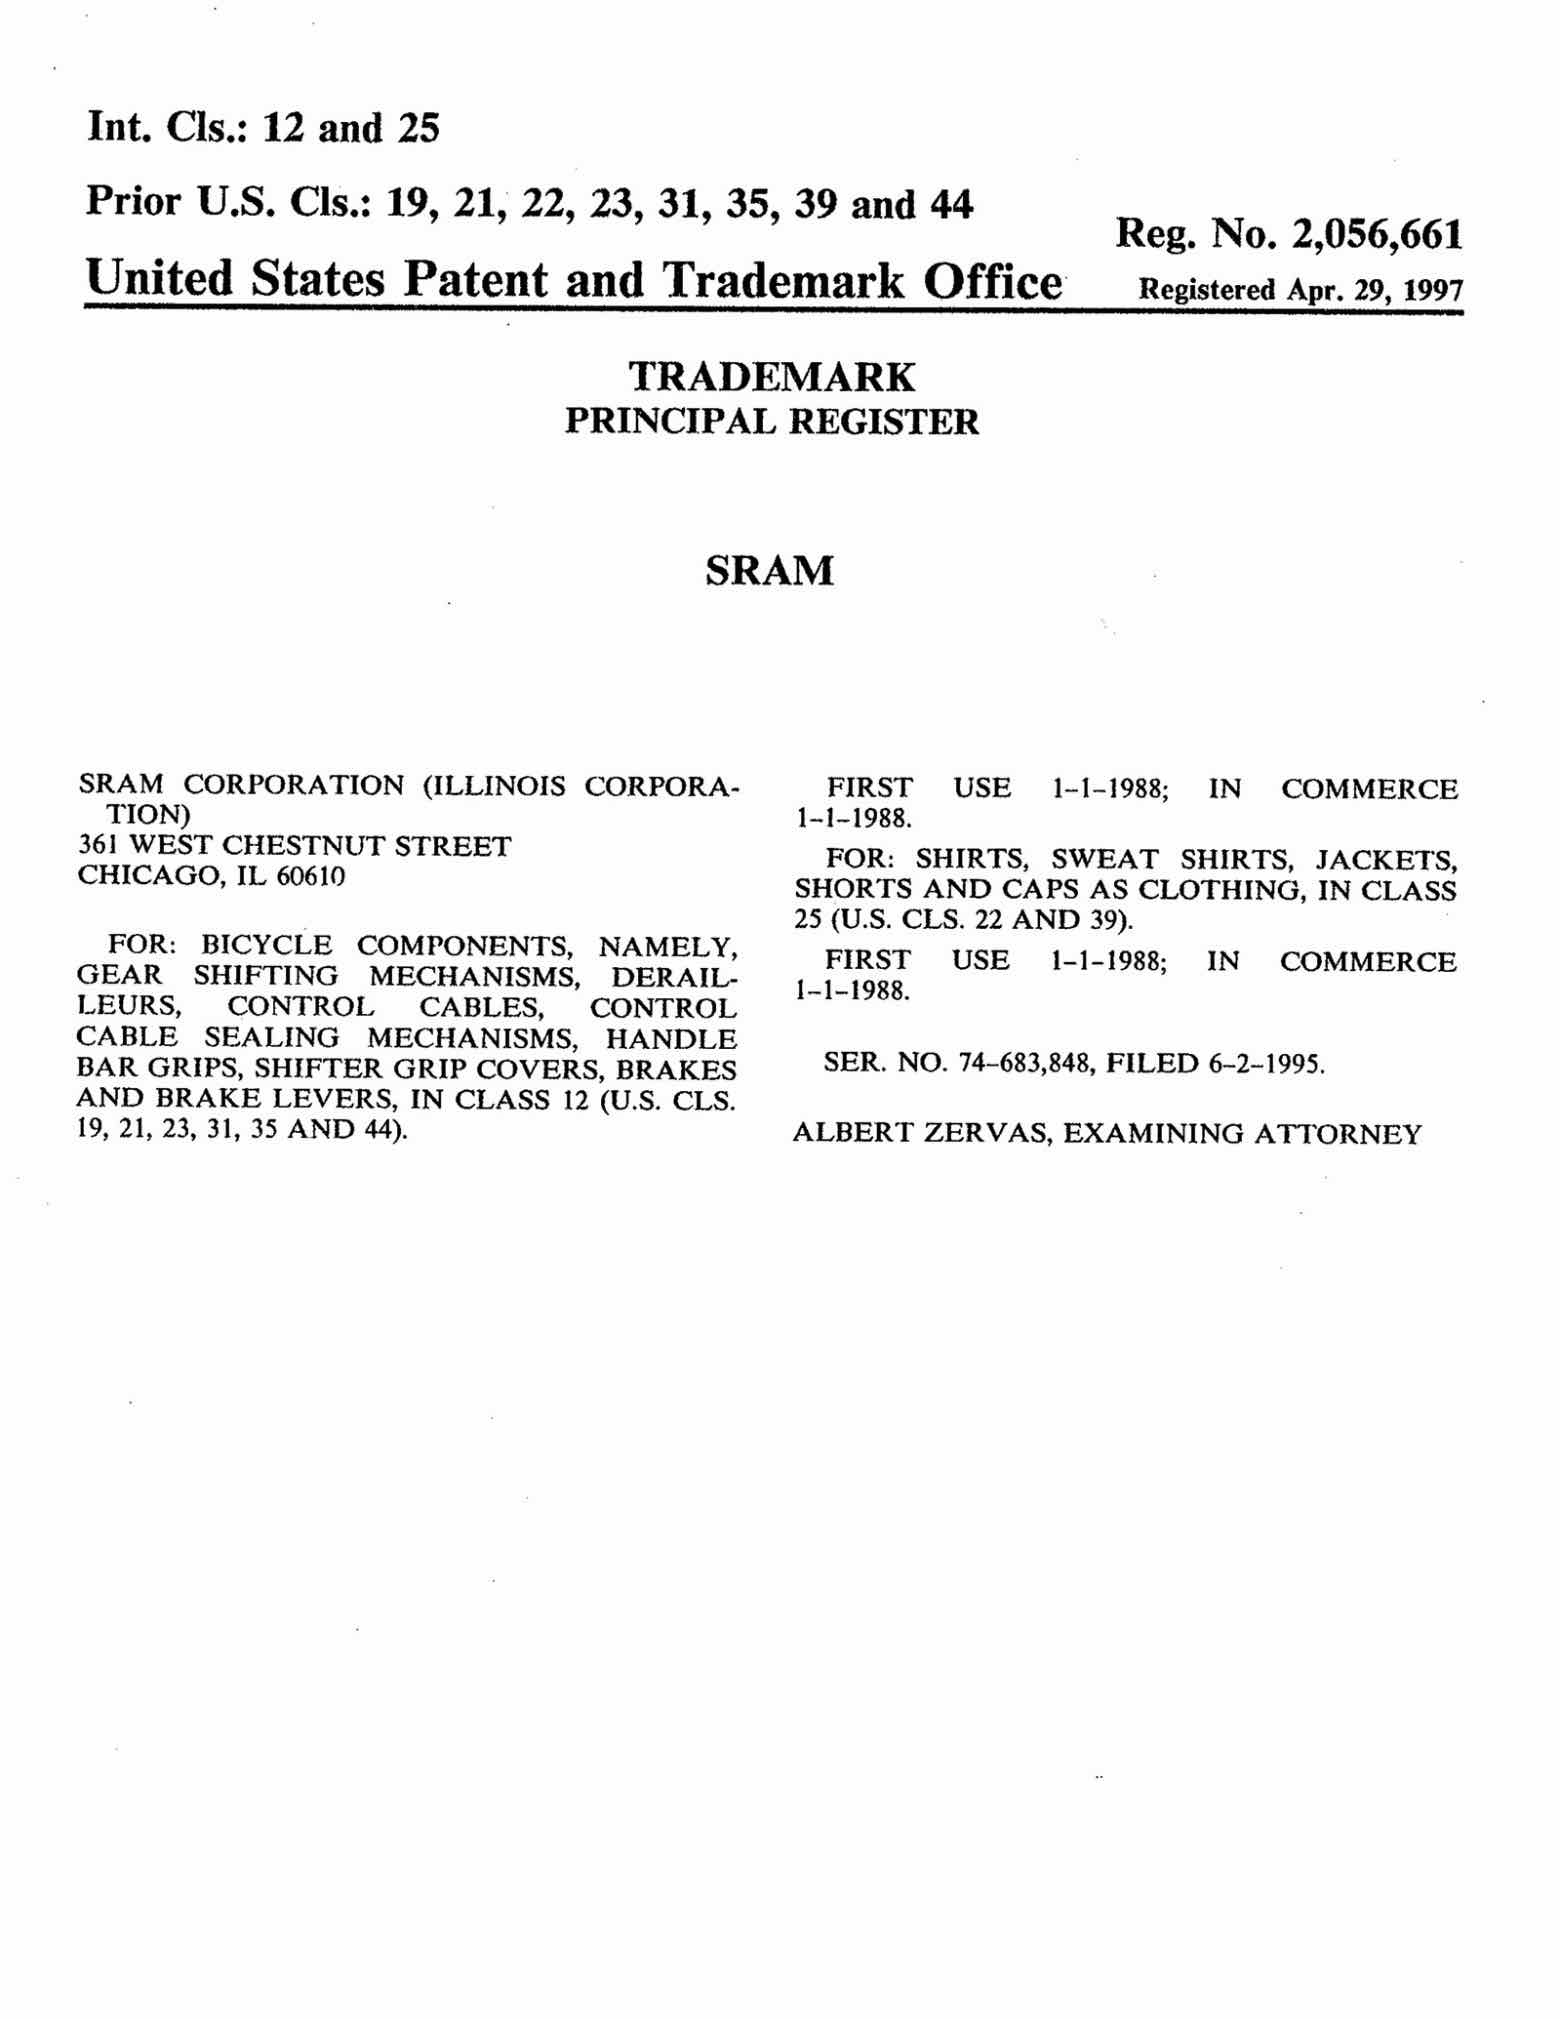 US Trademark 2,056,661 - SRAM main image